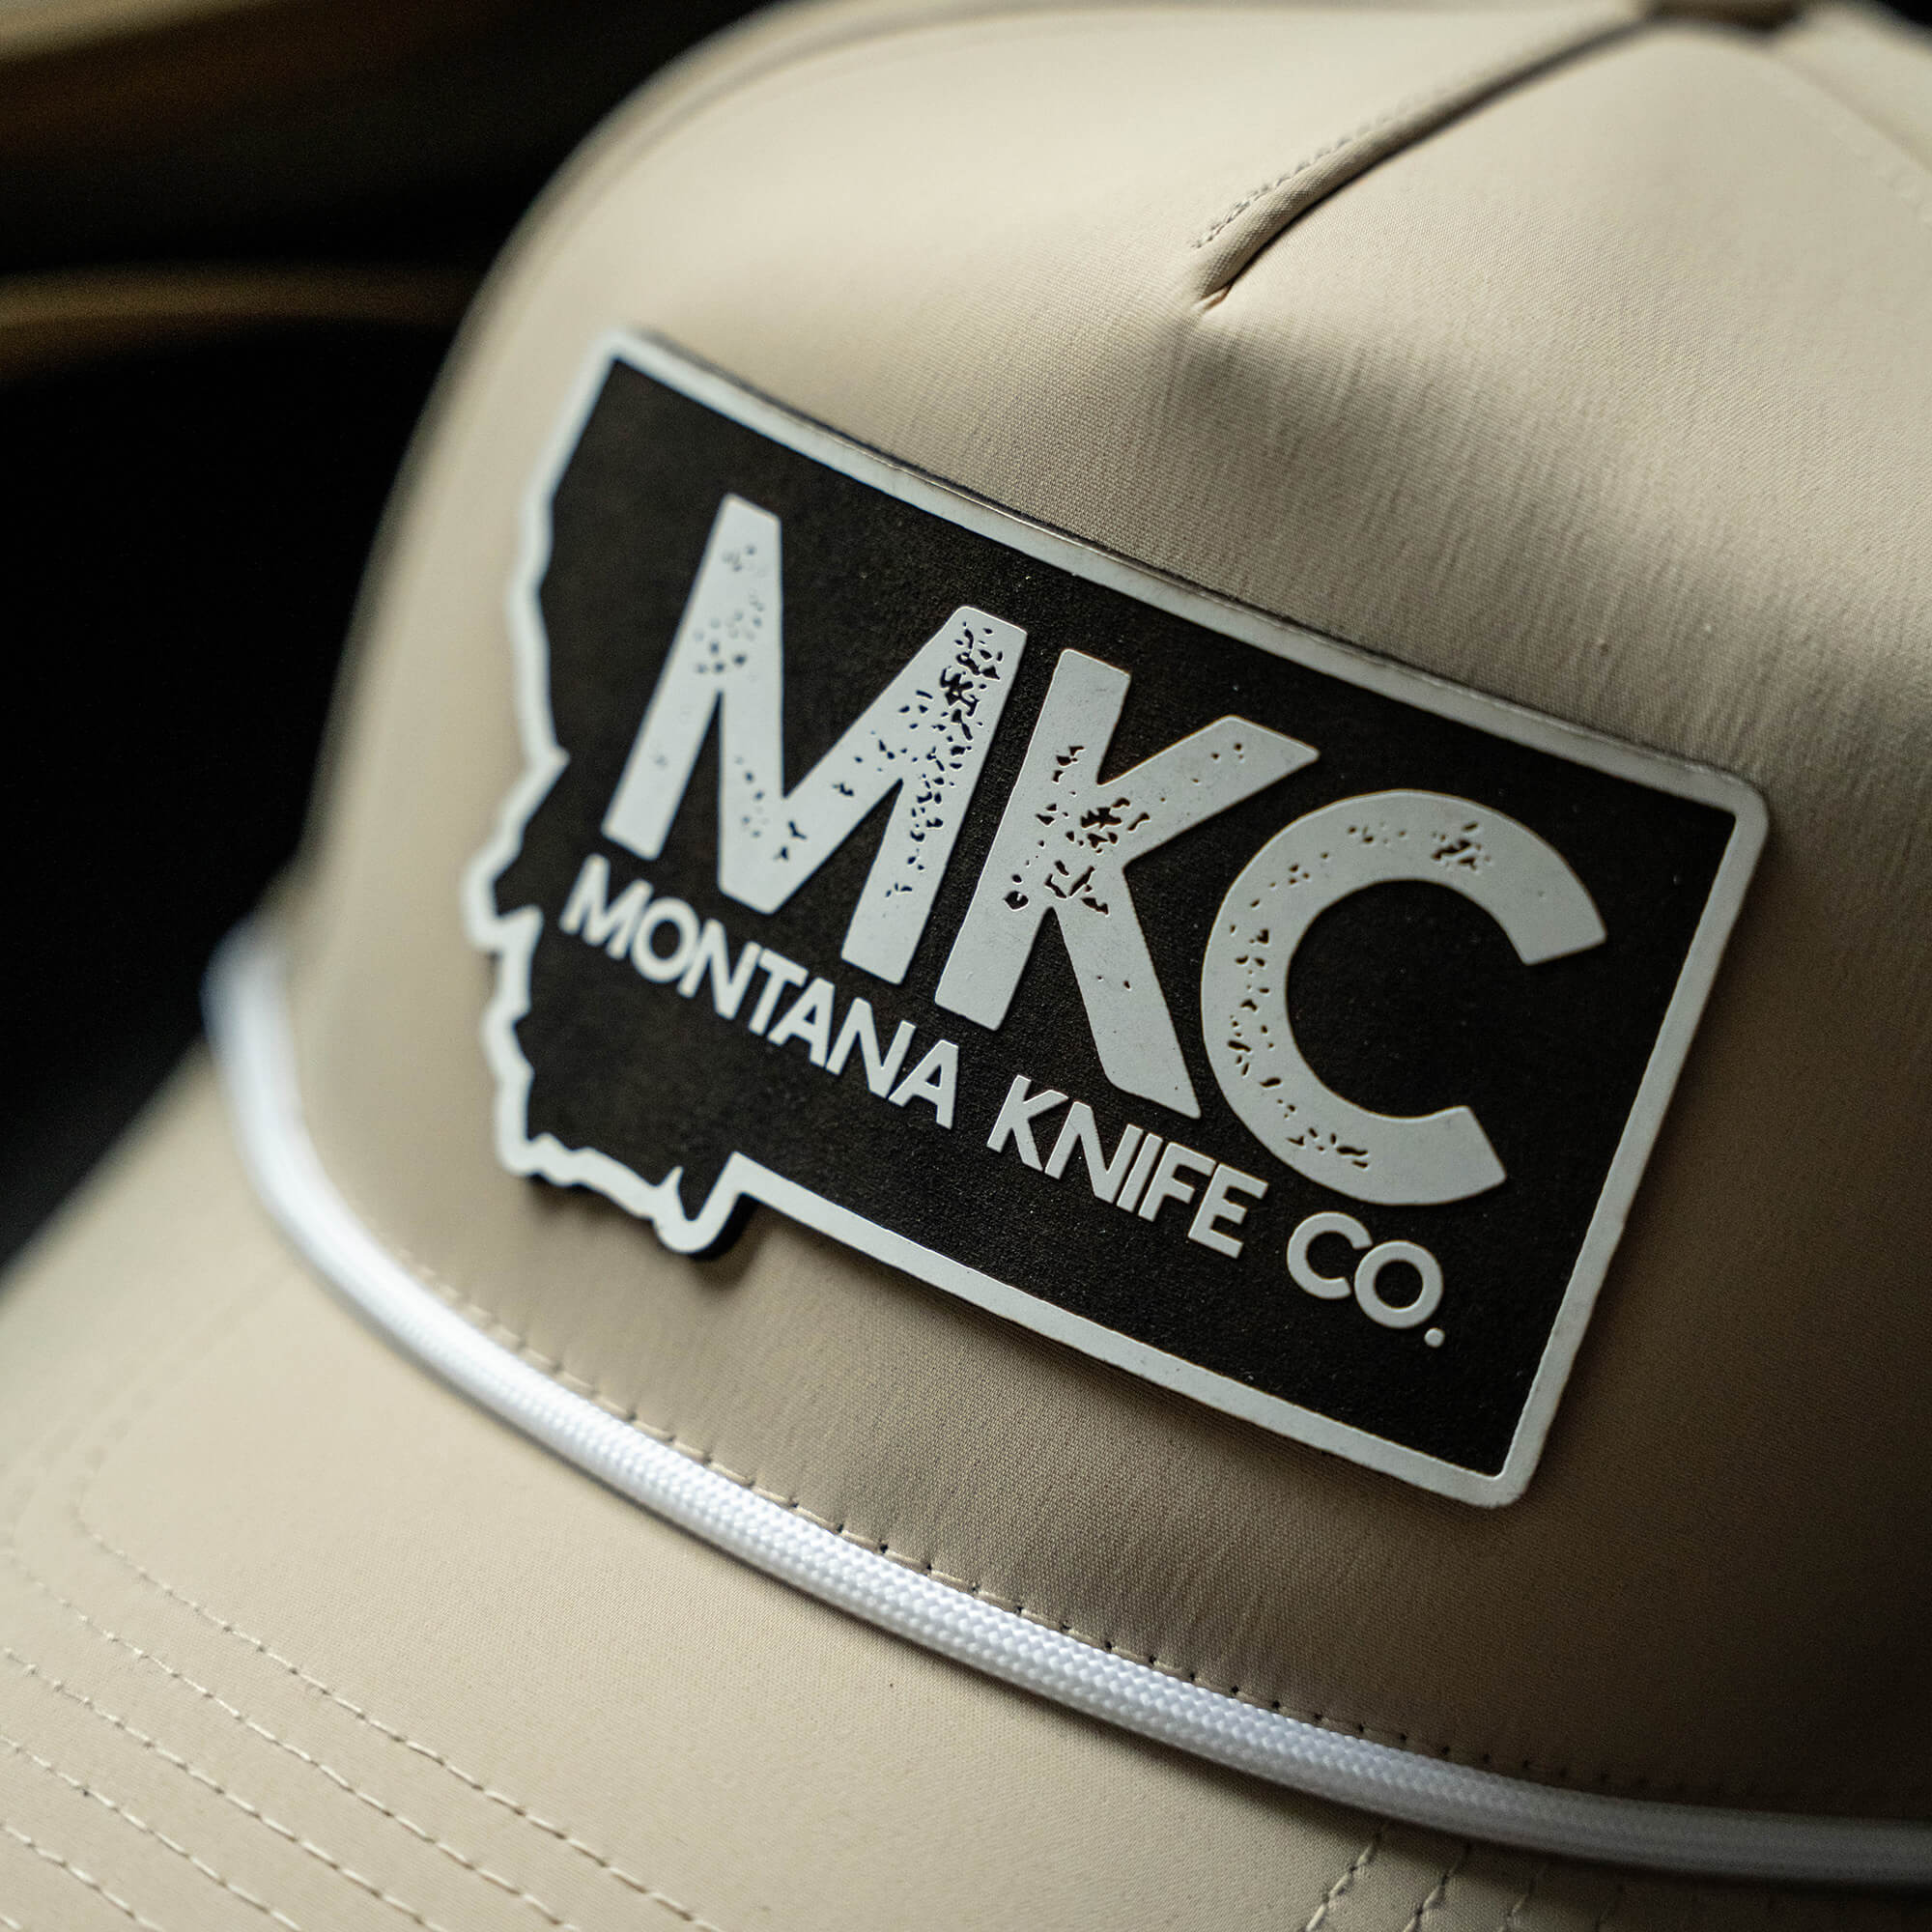 MKC BIG STATE PATCH - ROPE HAT - DESERT